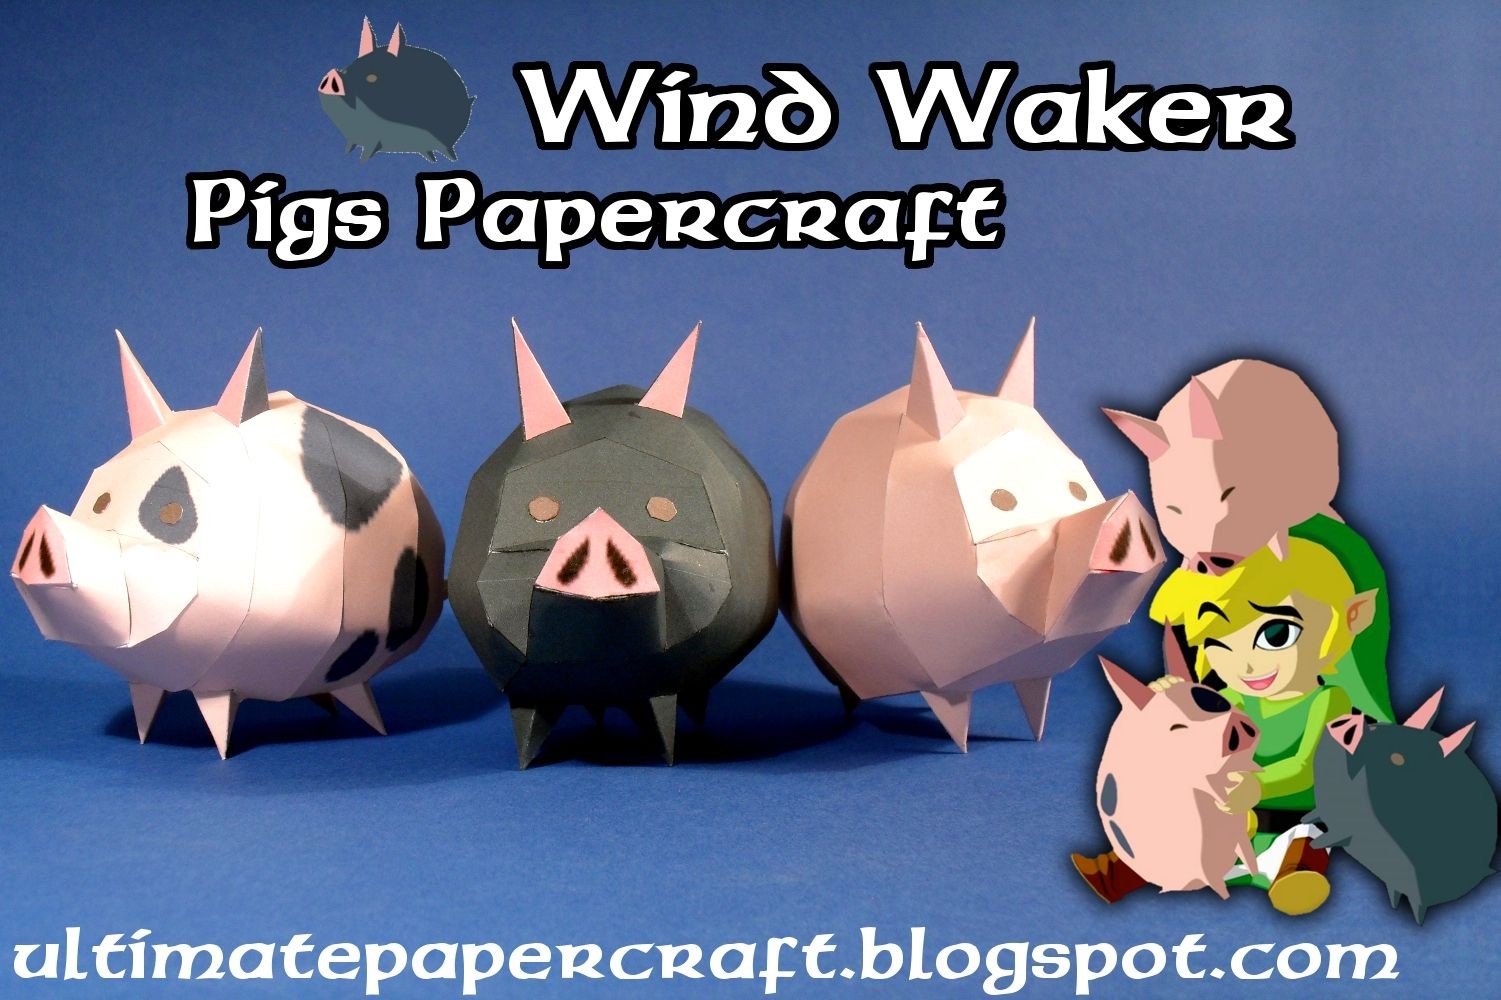 Ultimate Papercraft 3d Wind Waker Pigs Ultimate Papercraft Paper Craft